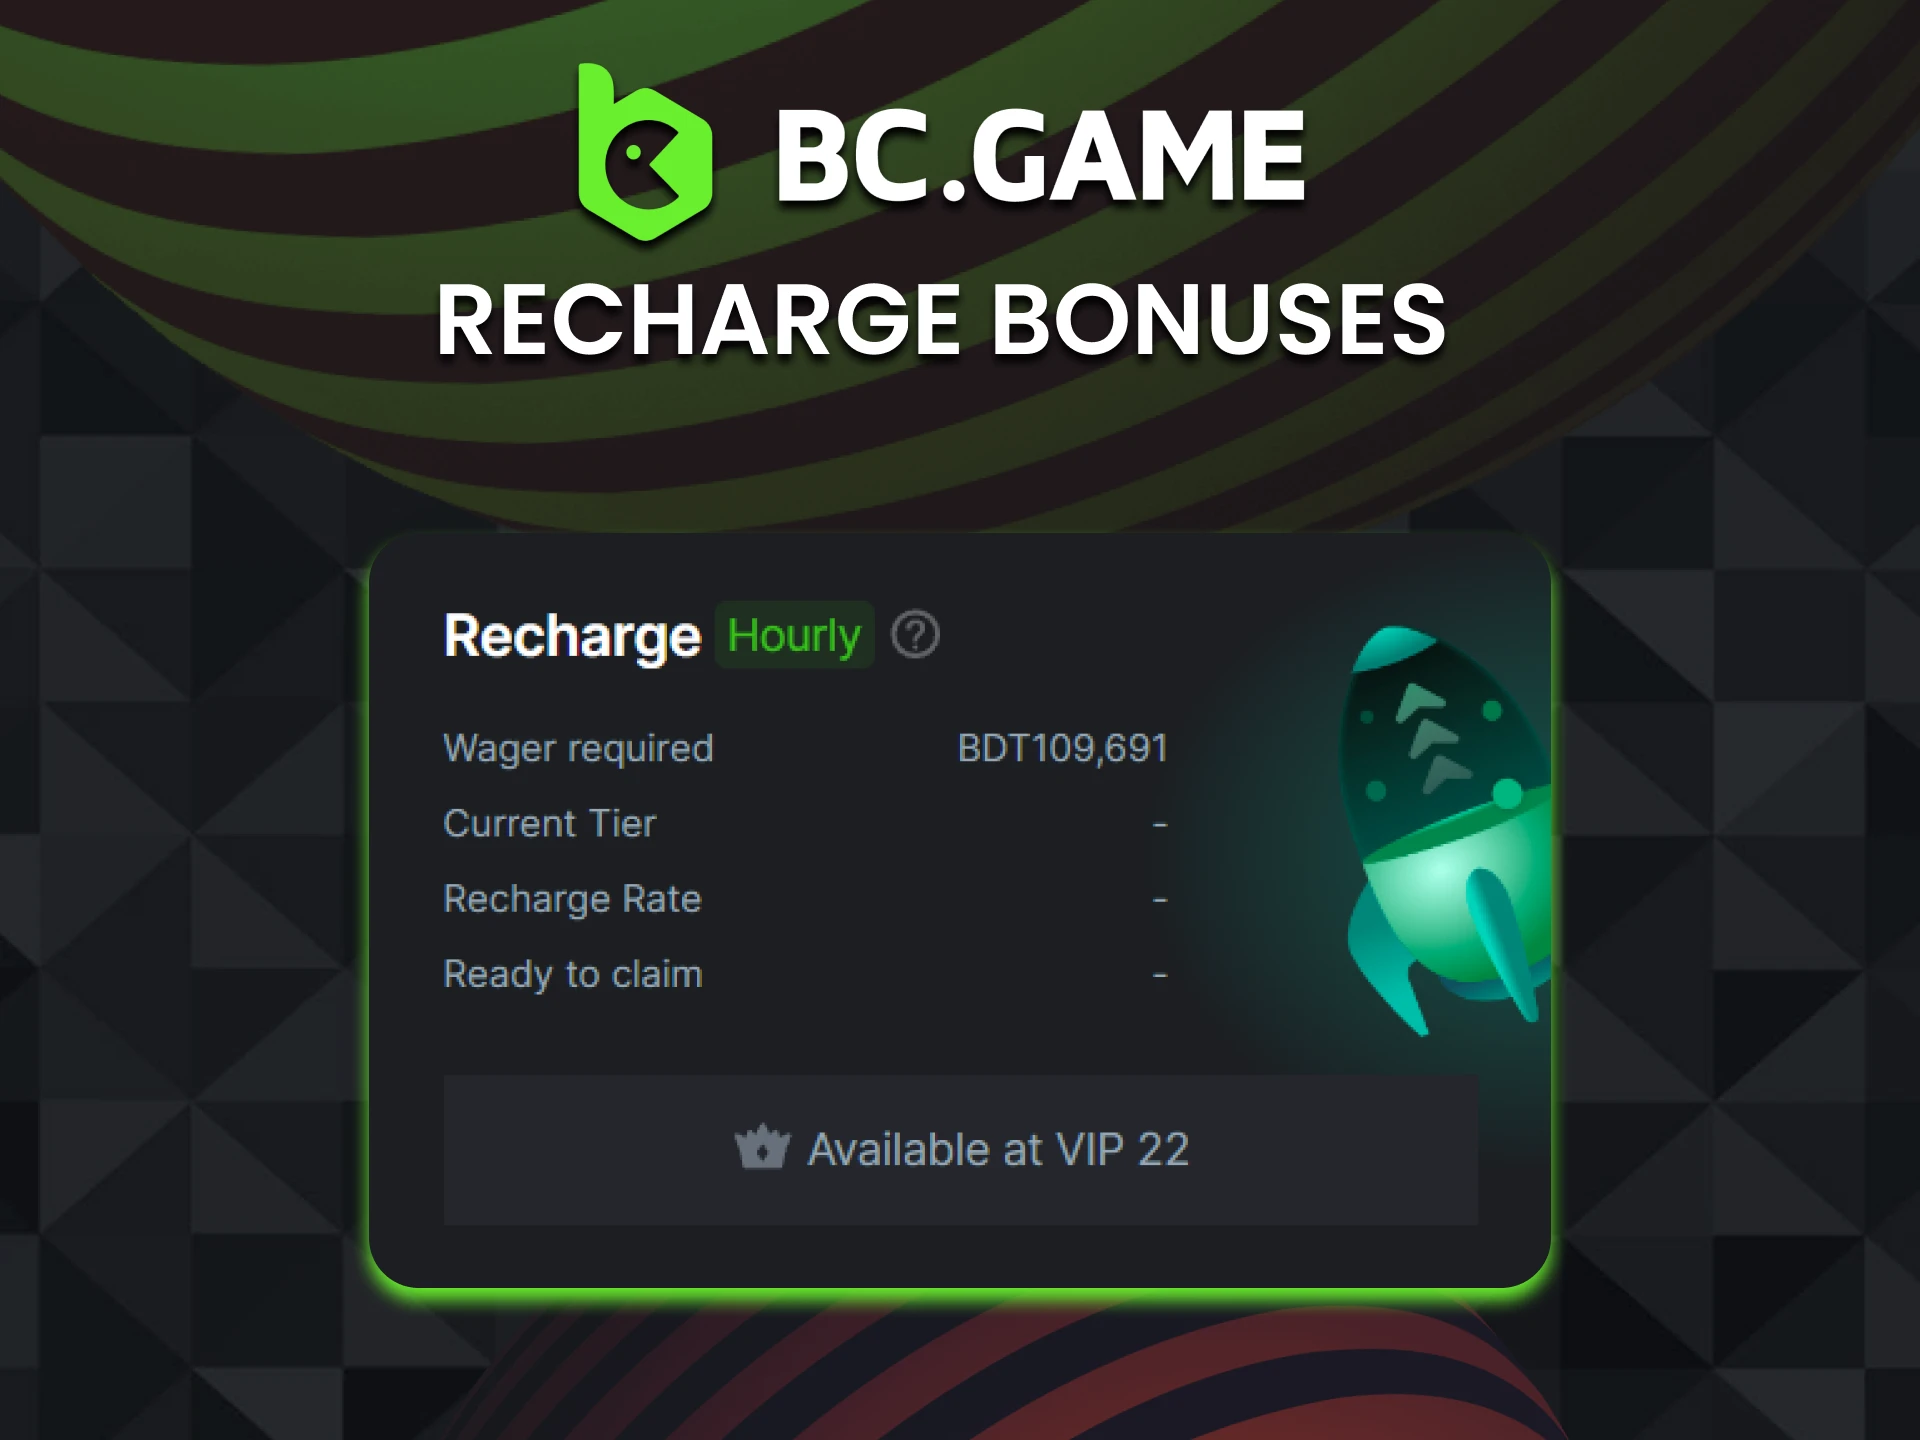 Get a special BC Game recharge bonus.